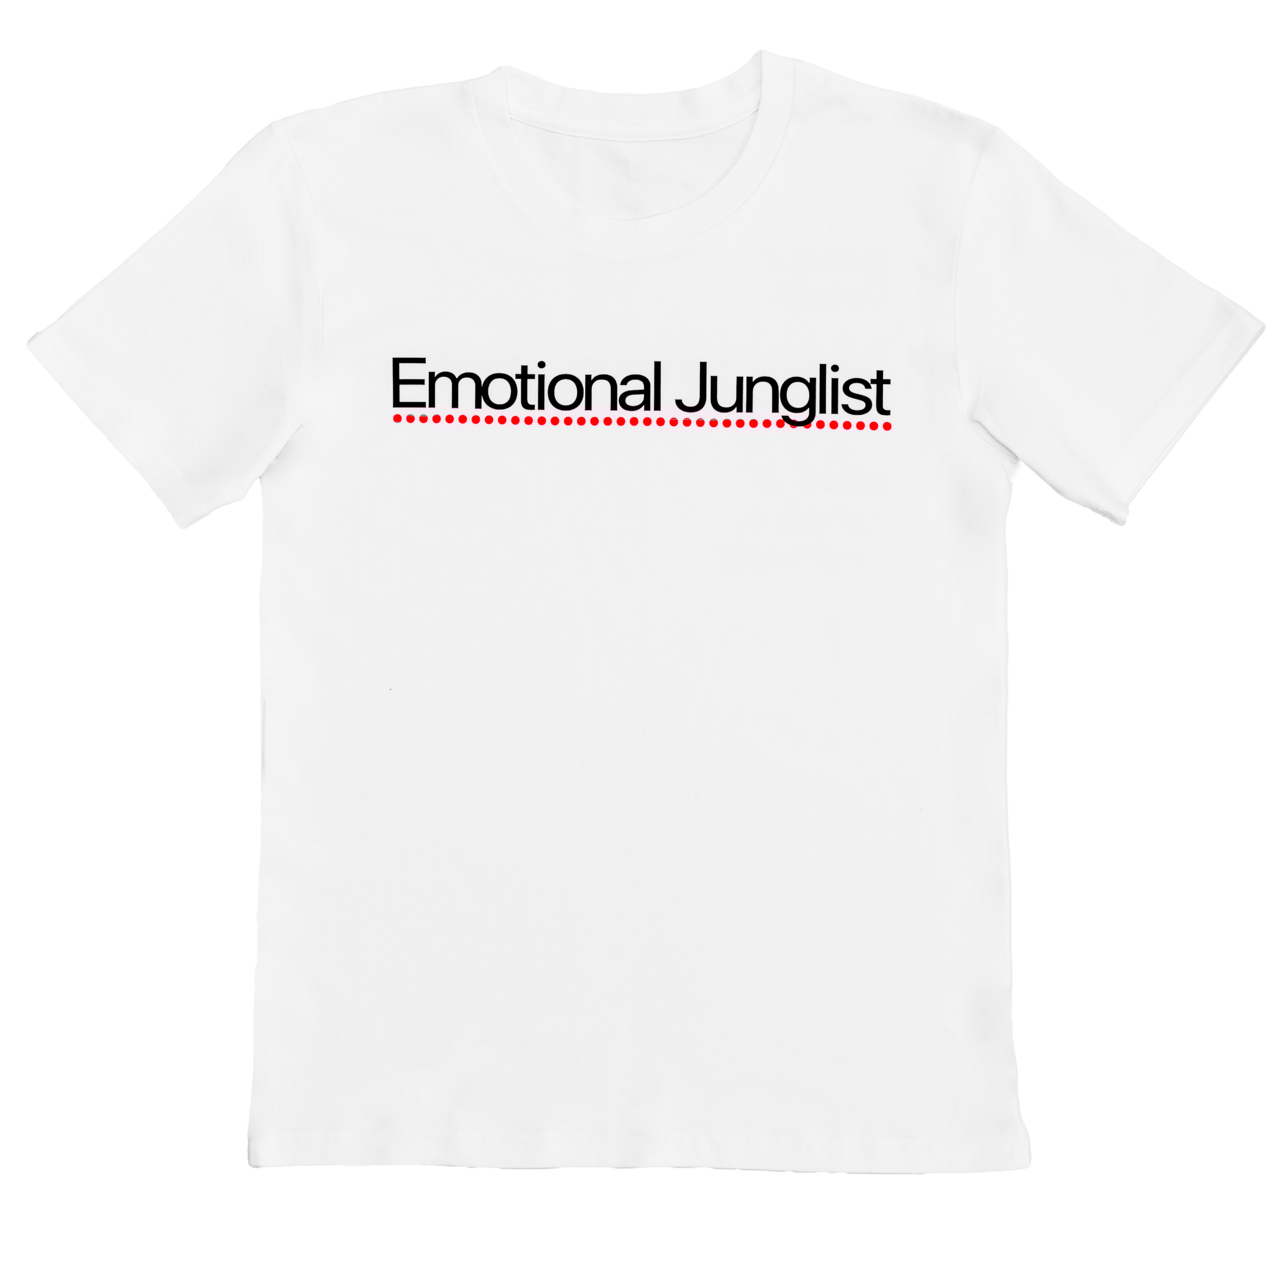 Nia Archives - Emotional Junglist T-shirt